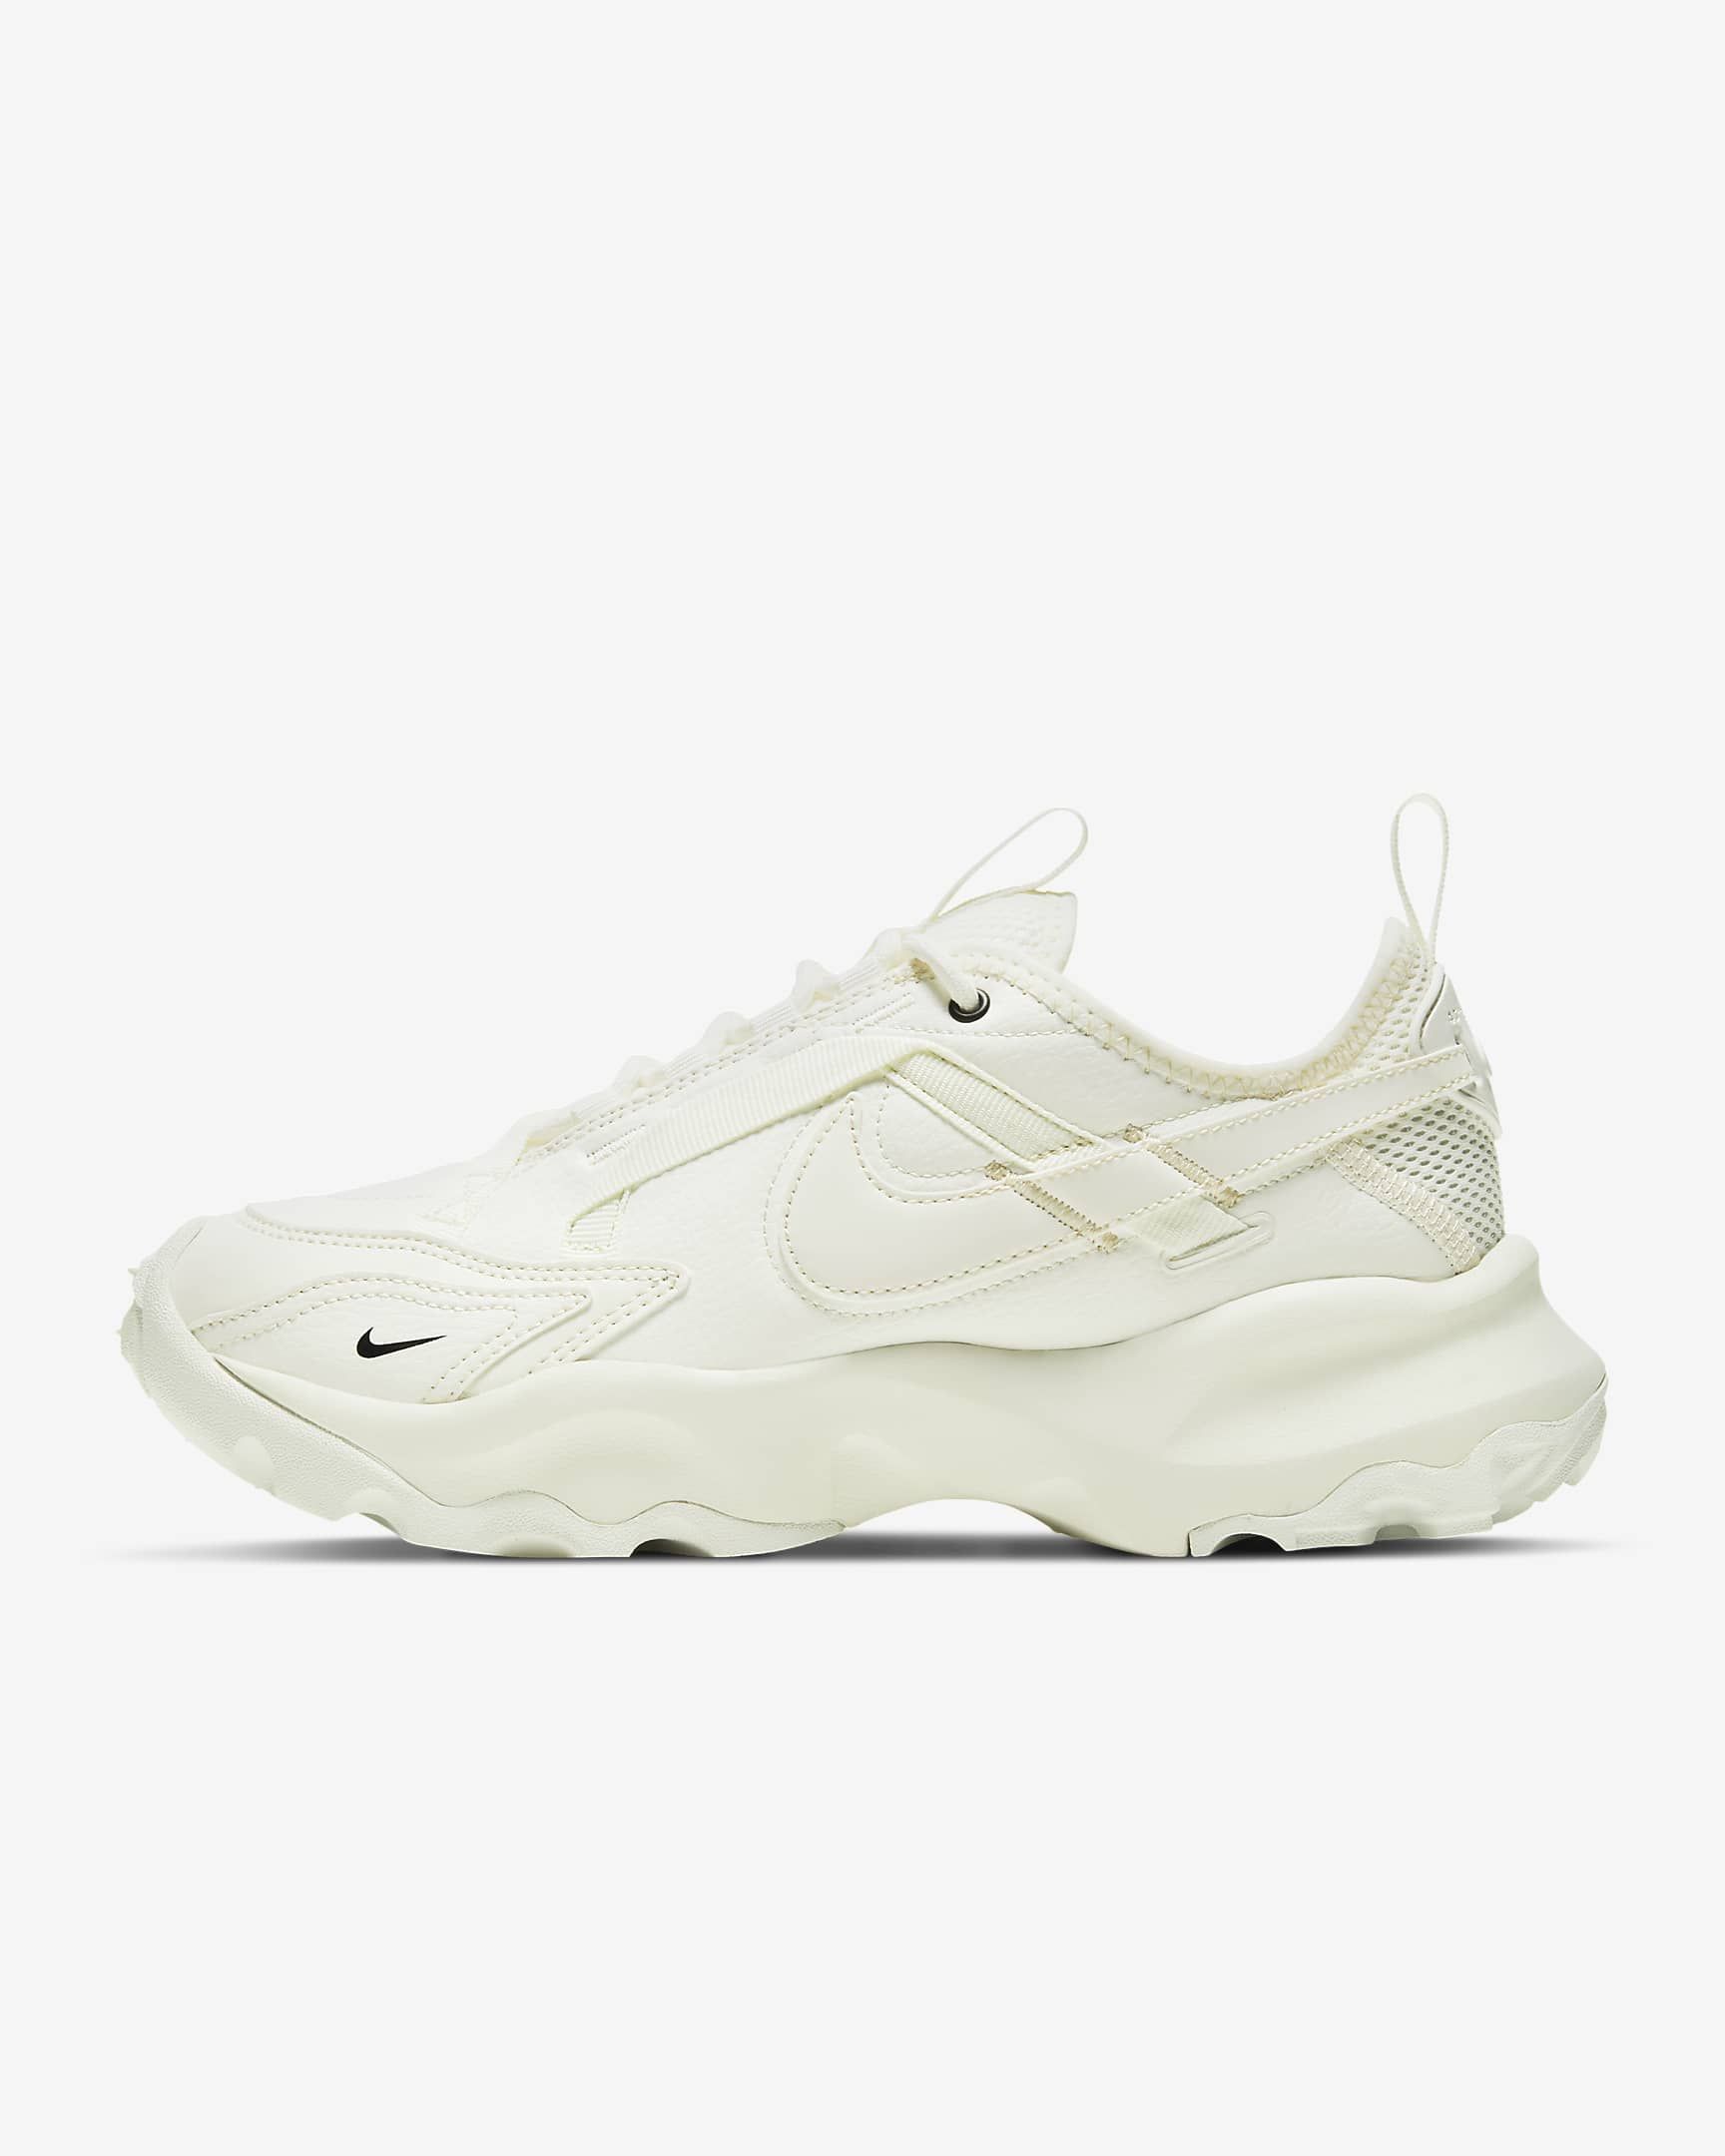 $120 | Nike (US)